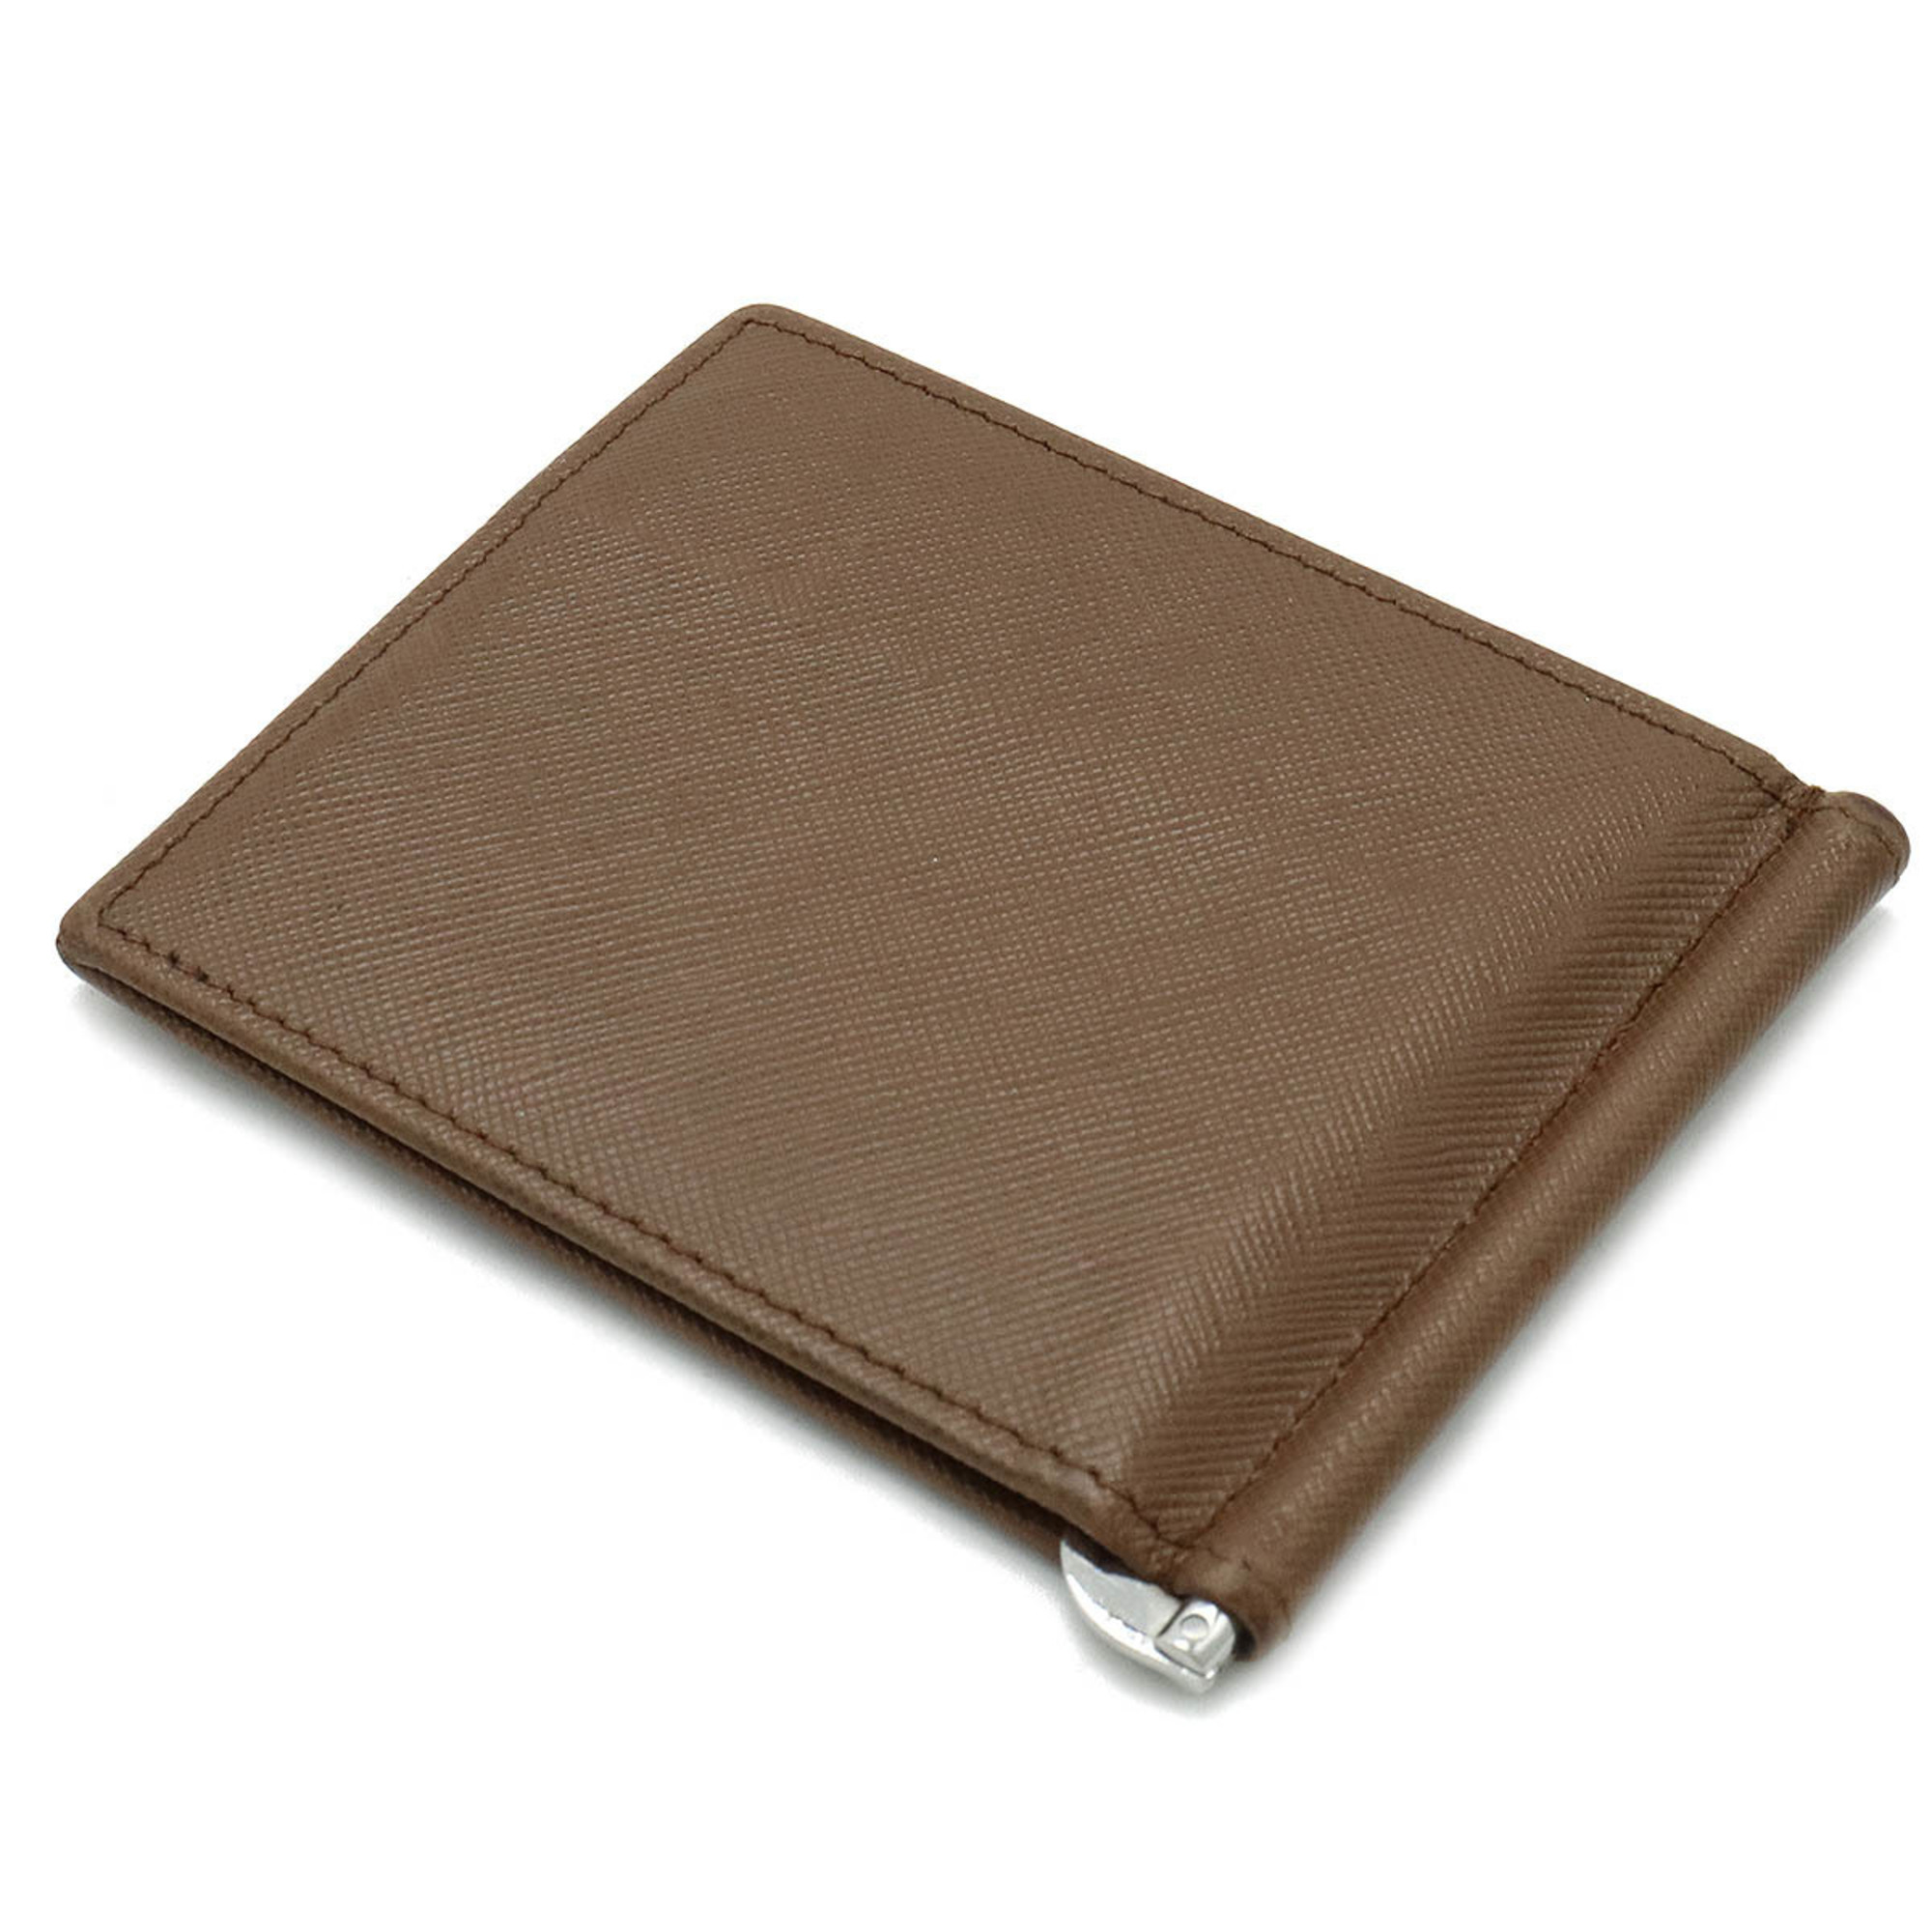 PRADA Prada Bi-fold Wallet with Money Clip Leather Light Brown 2MN077